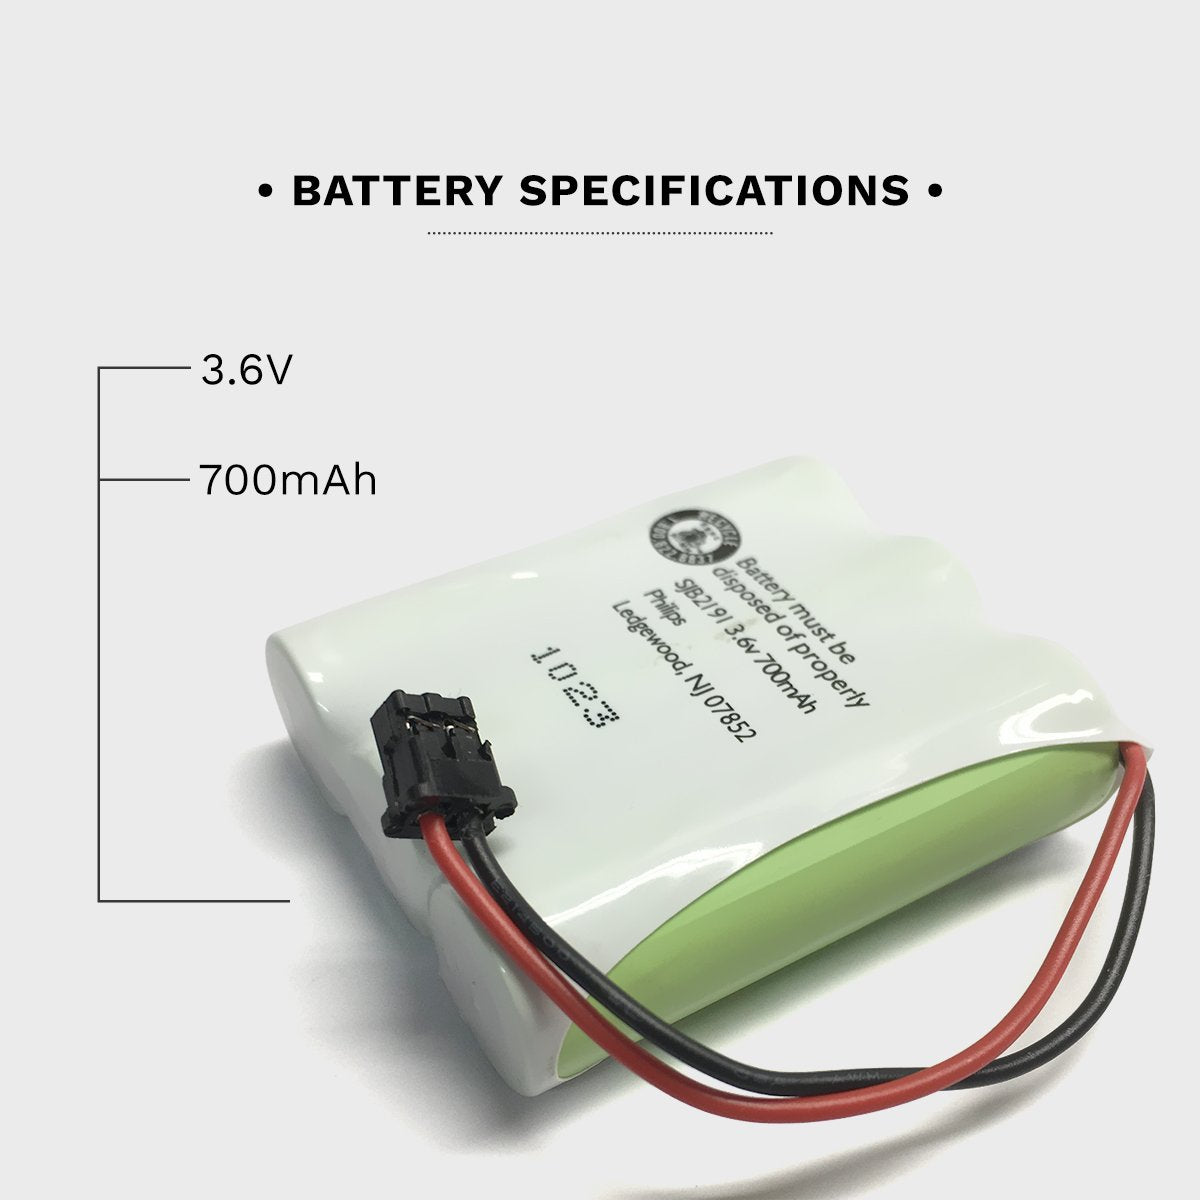 Uniden DXAI5688-3 Cordless Phone Battery